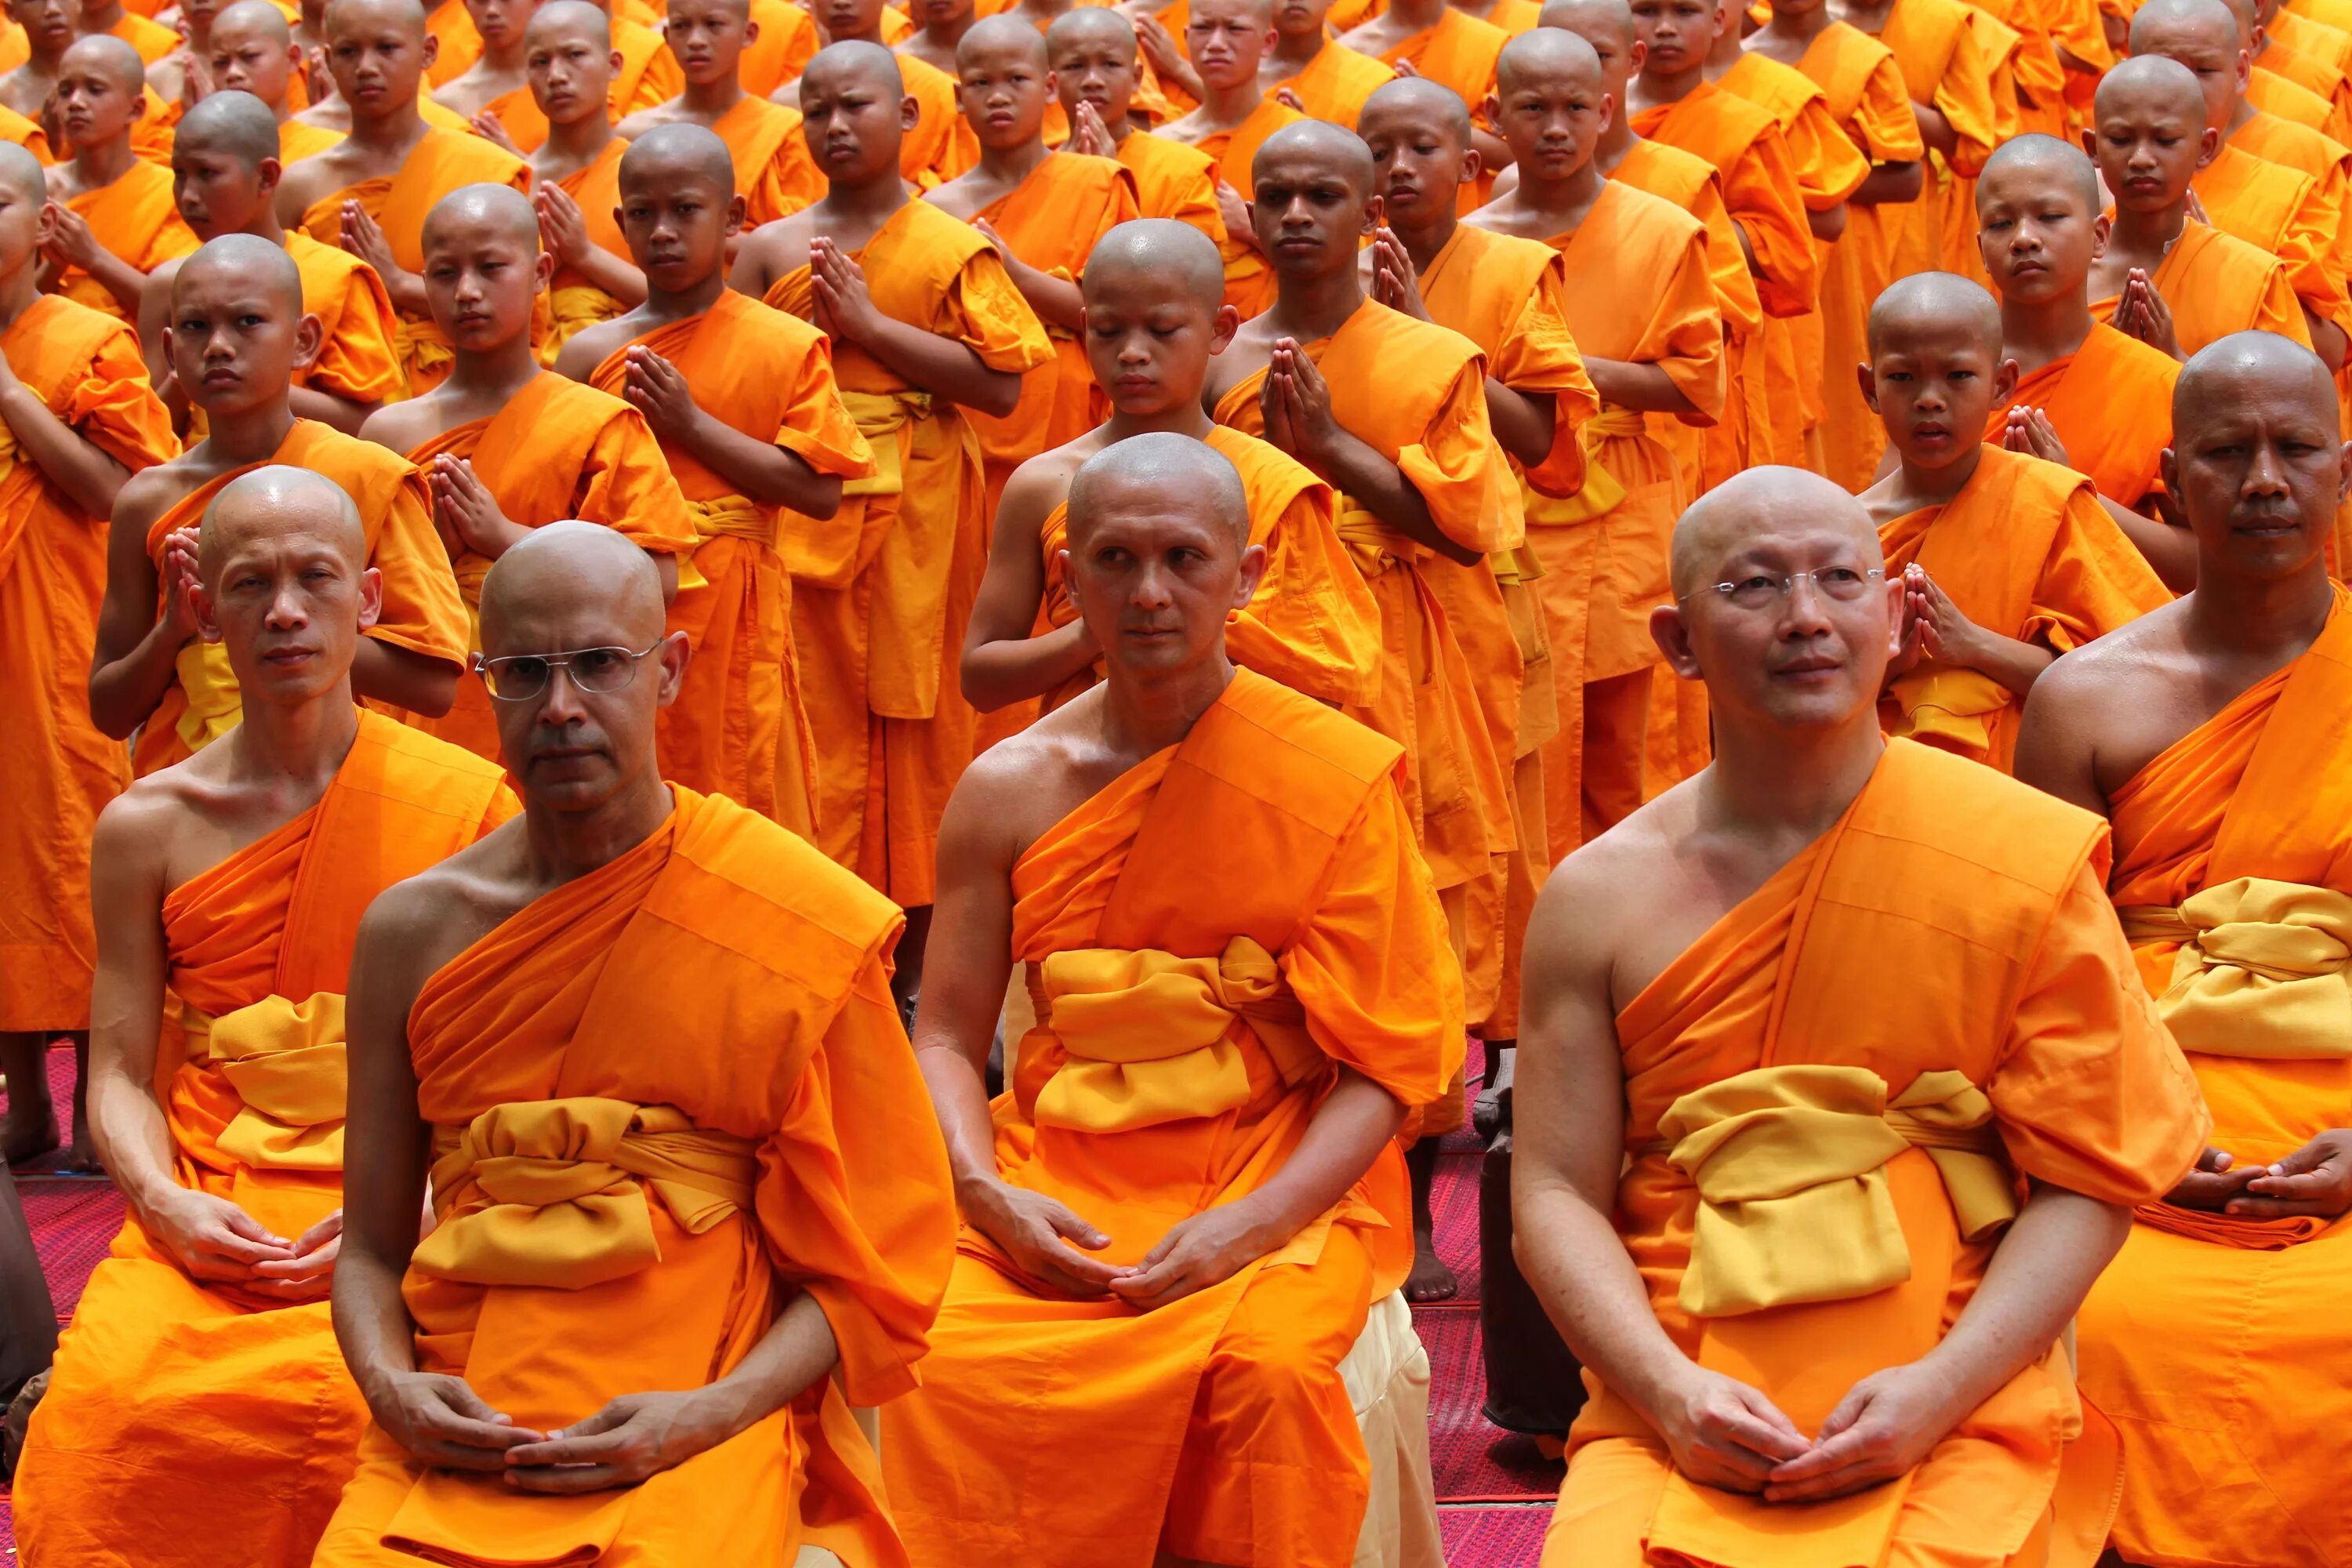 Монах Шаолинь оранжевое одеяние. Тхеравада-хинаяна. Буддизм махаяна монахи. Буддийский монах Вонгван.